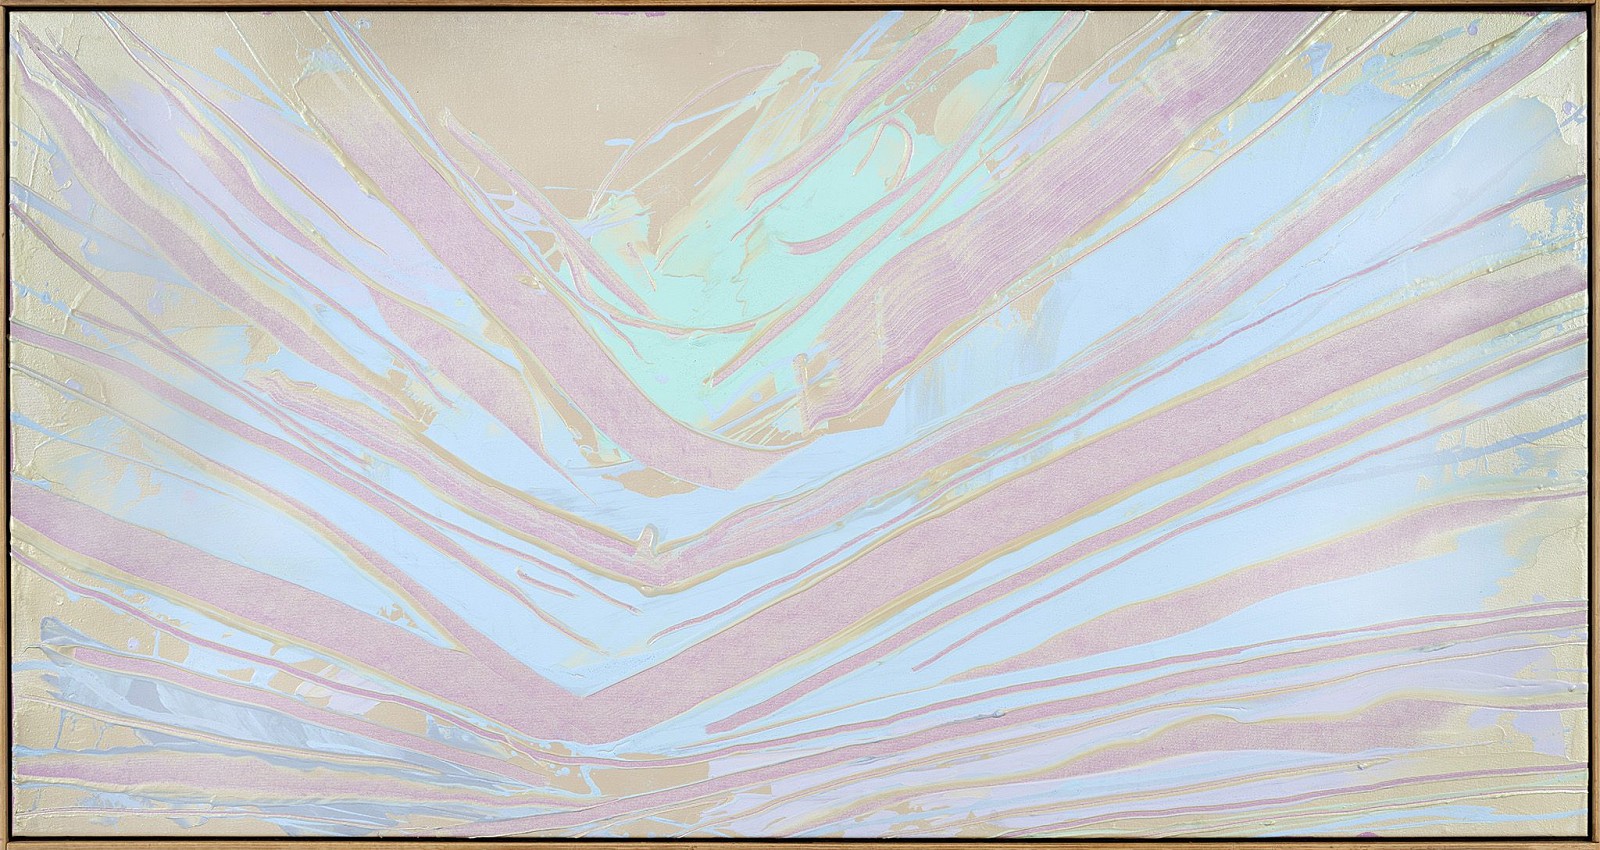 Dan Christensen, Kayaker, 1984
Acrylic on canvas, 47 x 89 in. (119.4 x 226.1 cm)
CHR-00349